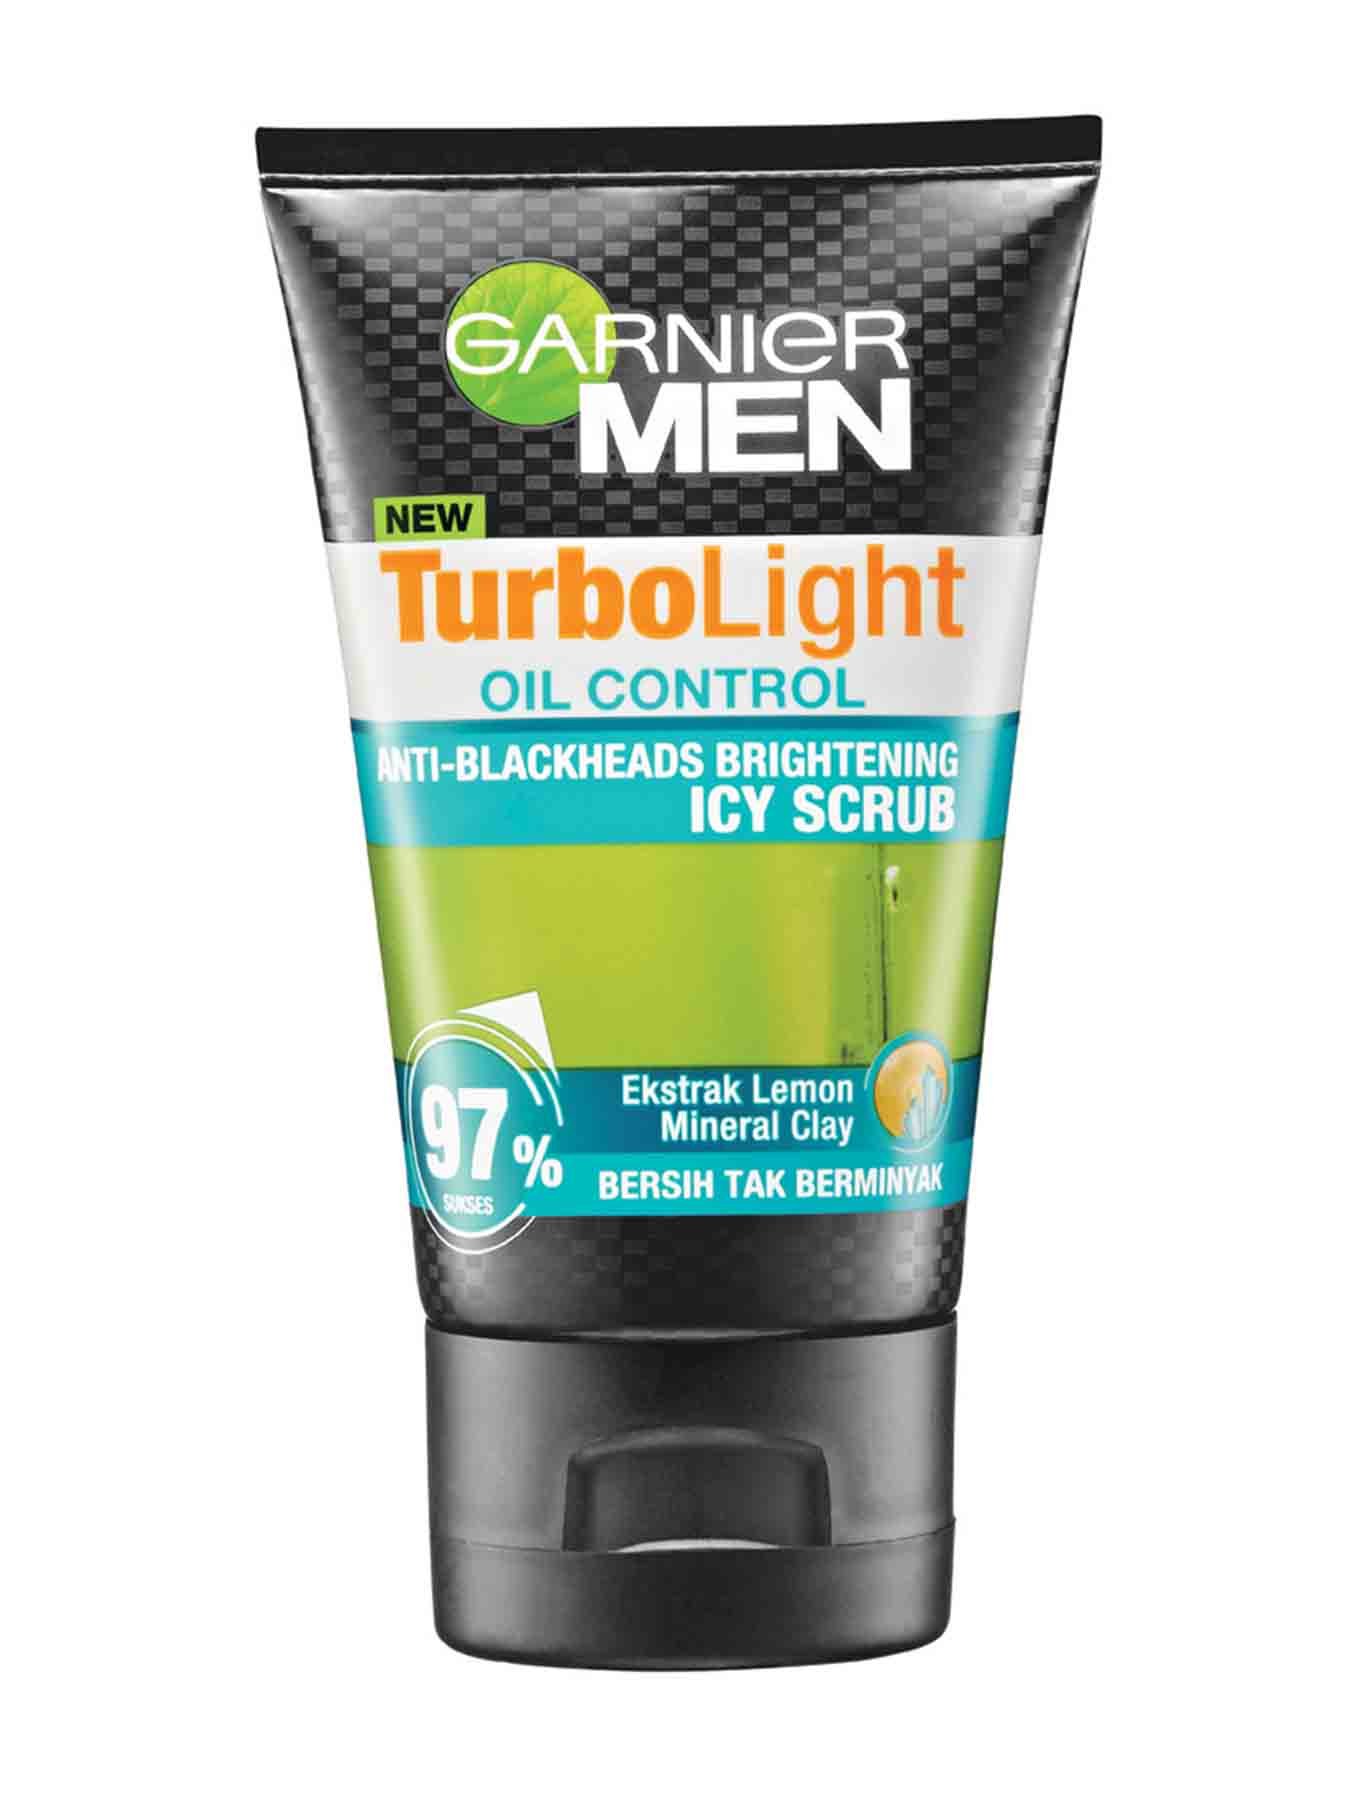 garnier men turbo light oil control anti blackheads brightening icy scrub